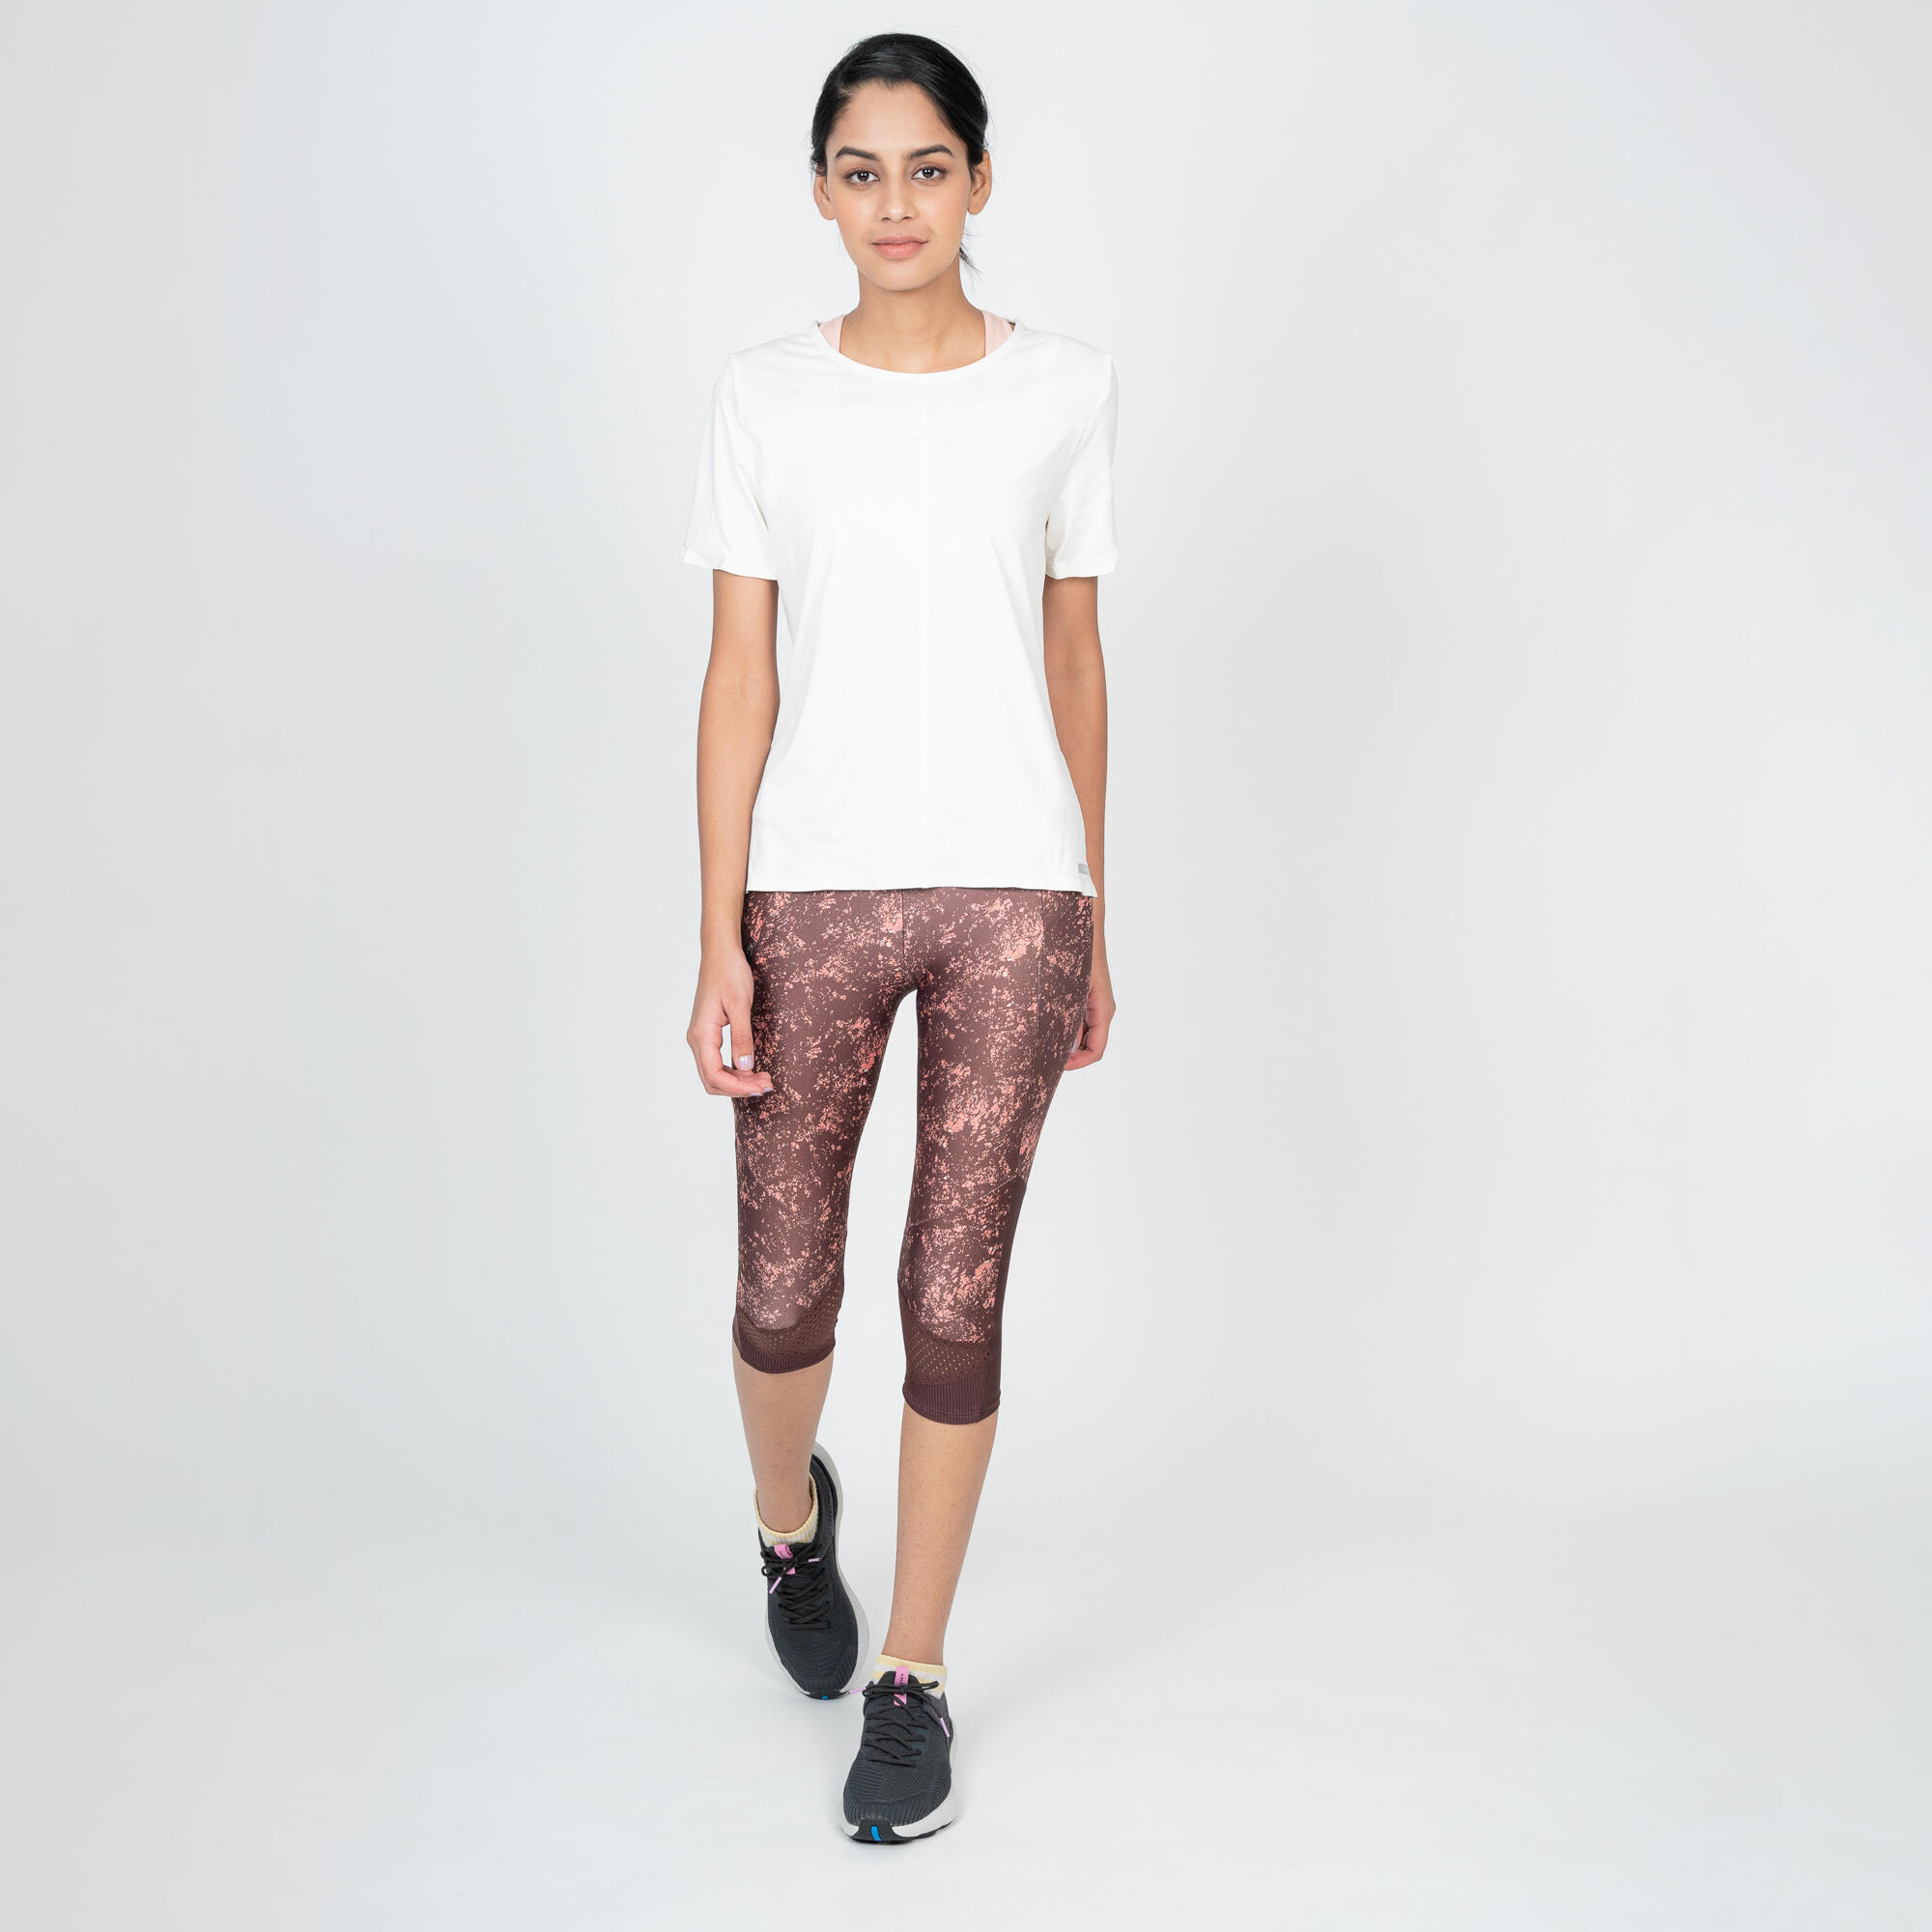 Nike Womens Pink Floral Polyester Capri Leggings Size XL L28 in